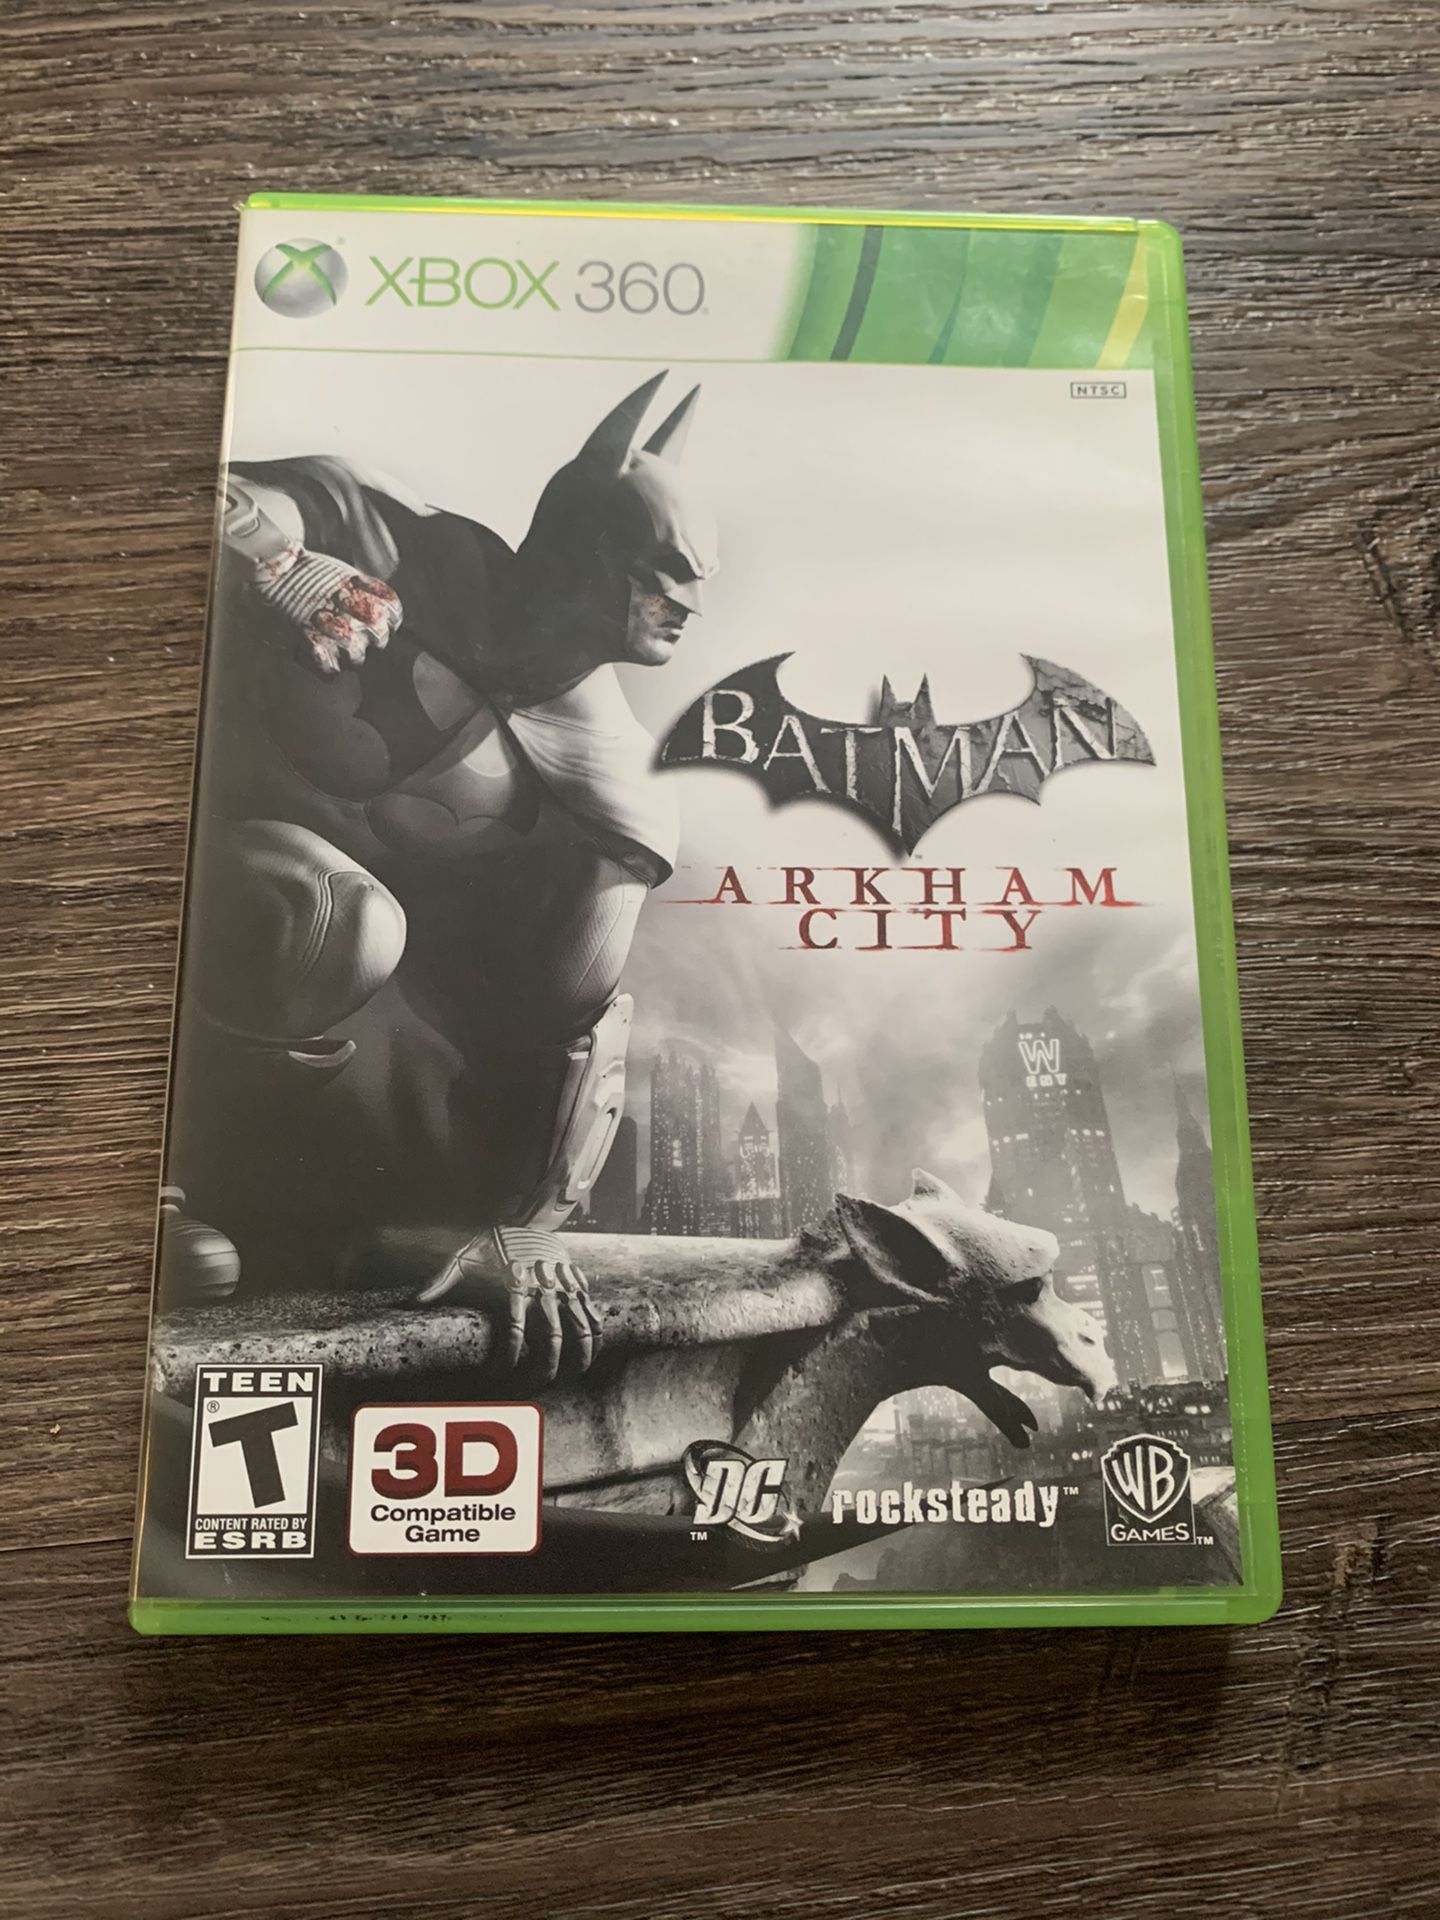 Xbox 360 Batman Arkham Citi game